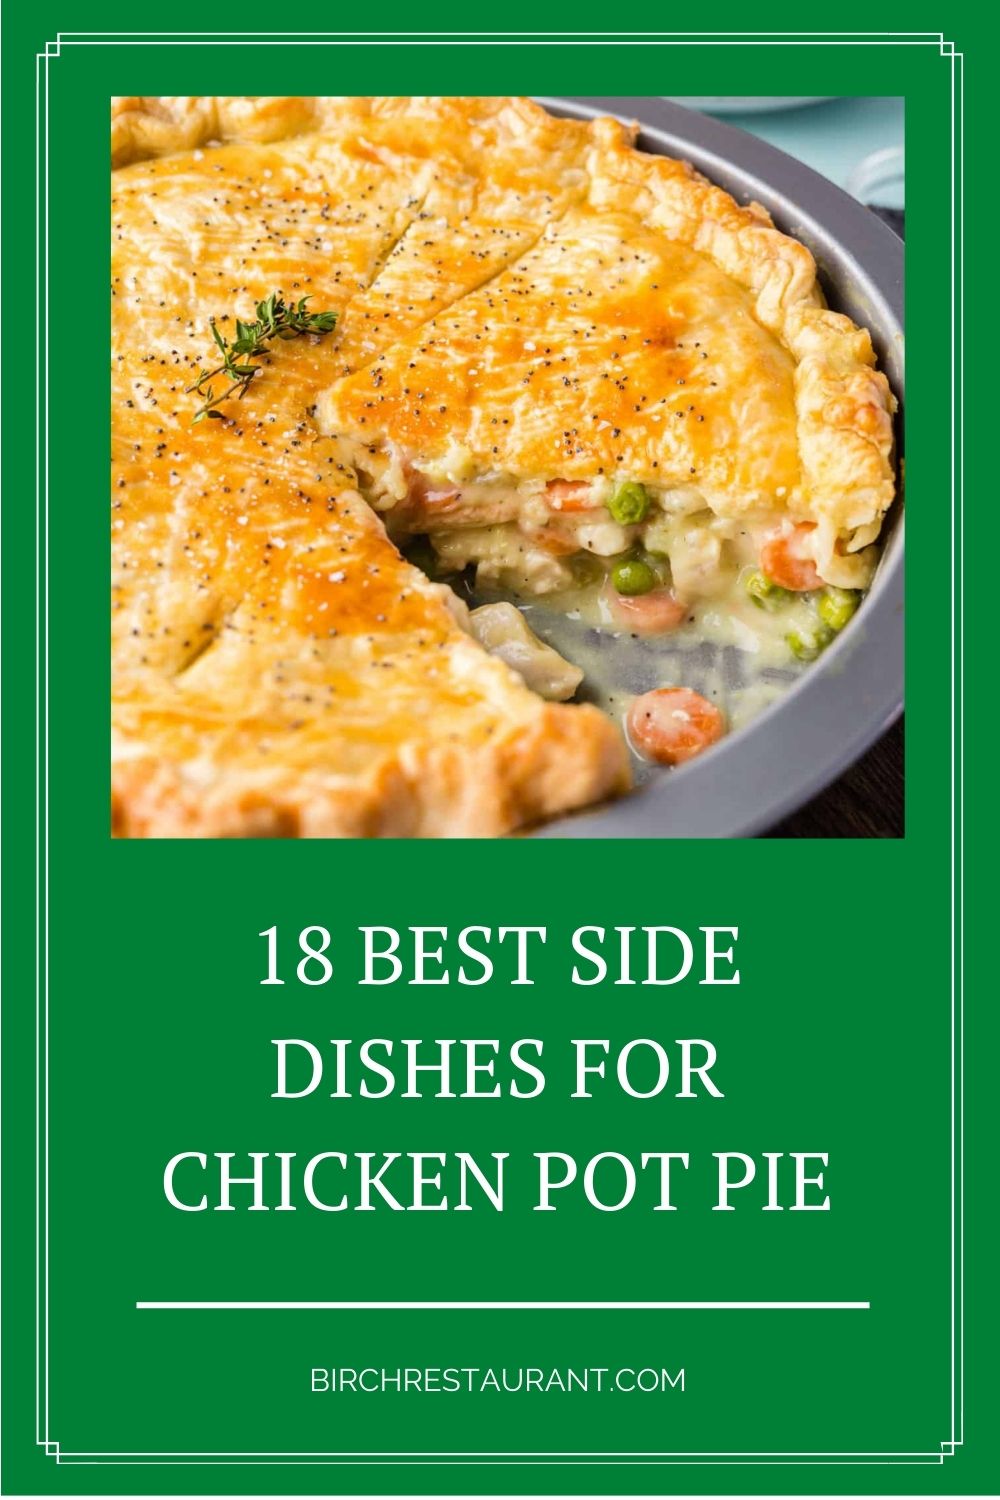 Best Side Dishes for Chicken Pot Pie